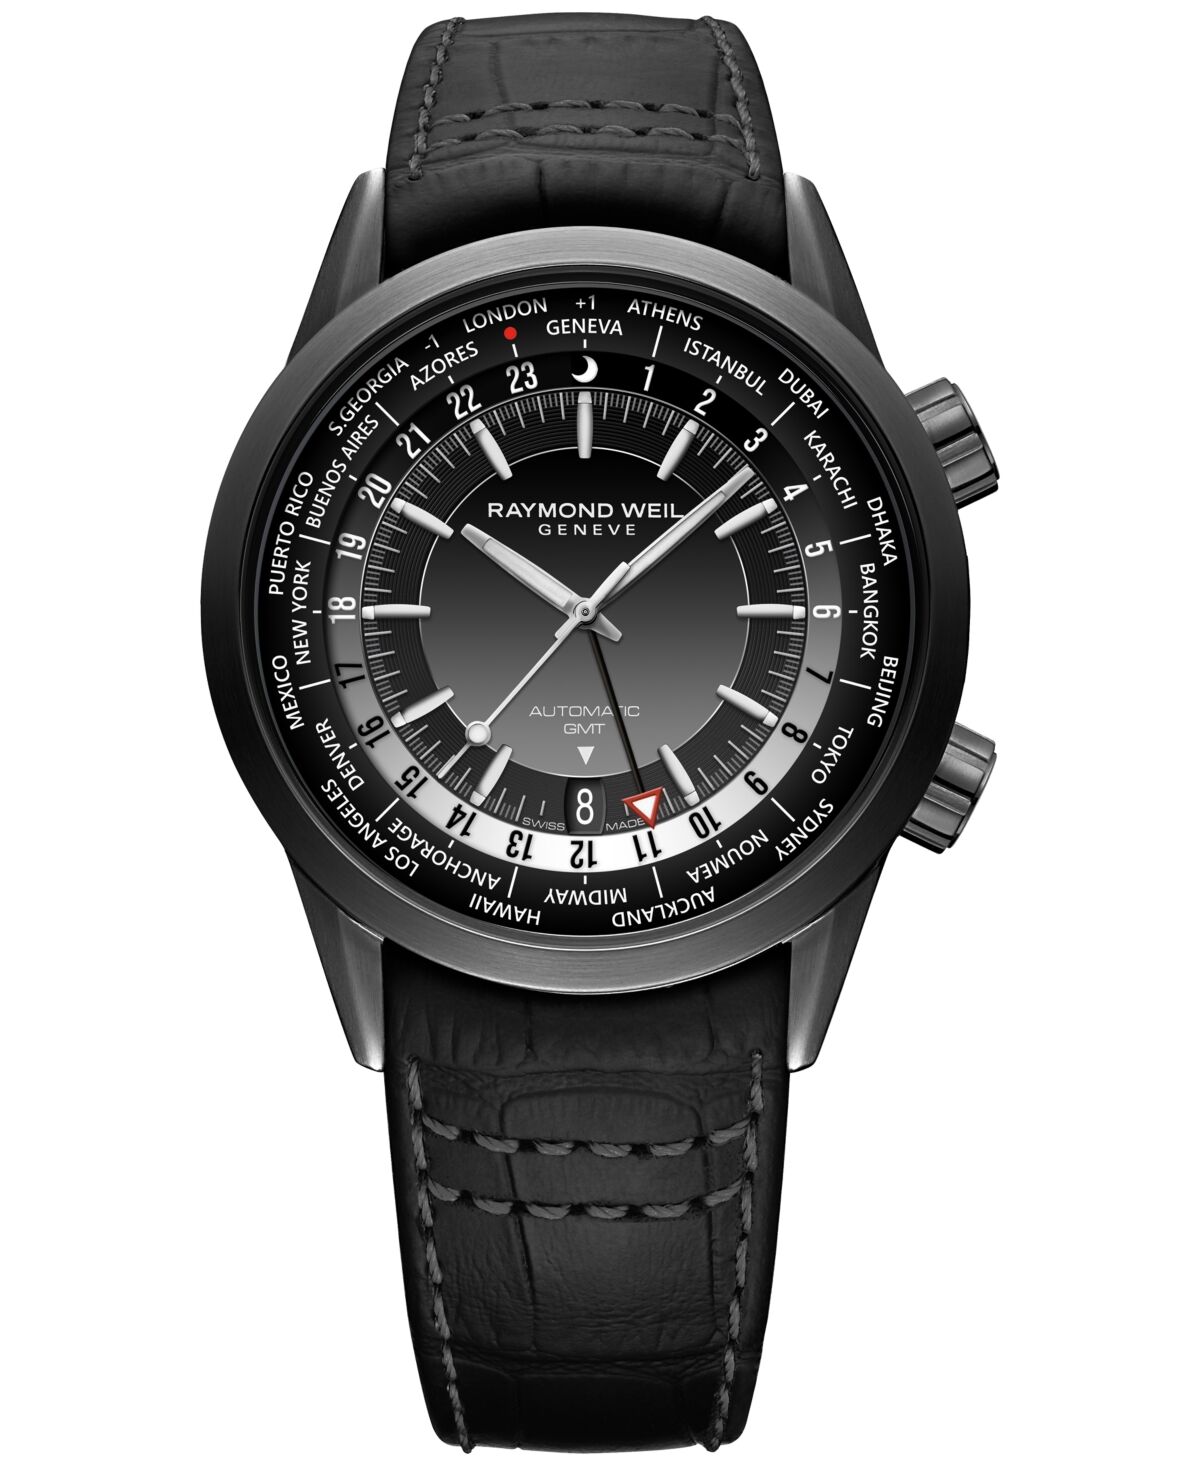 Raymond Weil Men's Swiss Automatic Freelancer Gmt Black Leather Strap Watch 41mm - Black